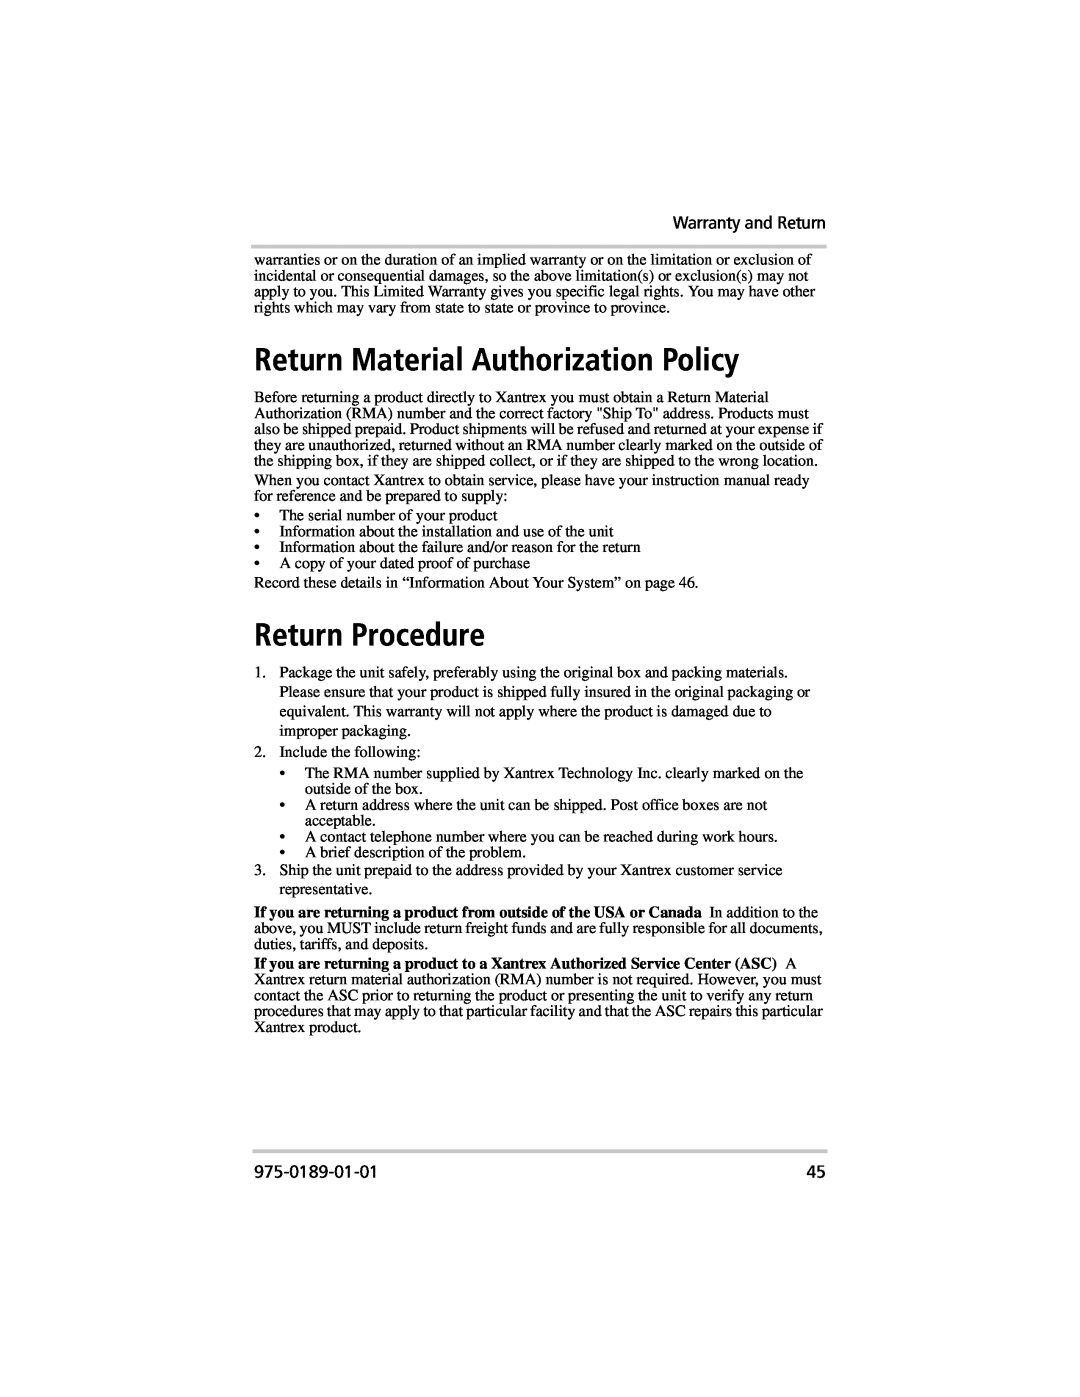 Xantrex Technology 400, 800 Return Material Authorization Policy, Return Procedure, Warranty and Return, 975-0189-01-01 